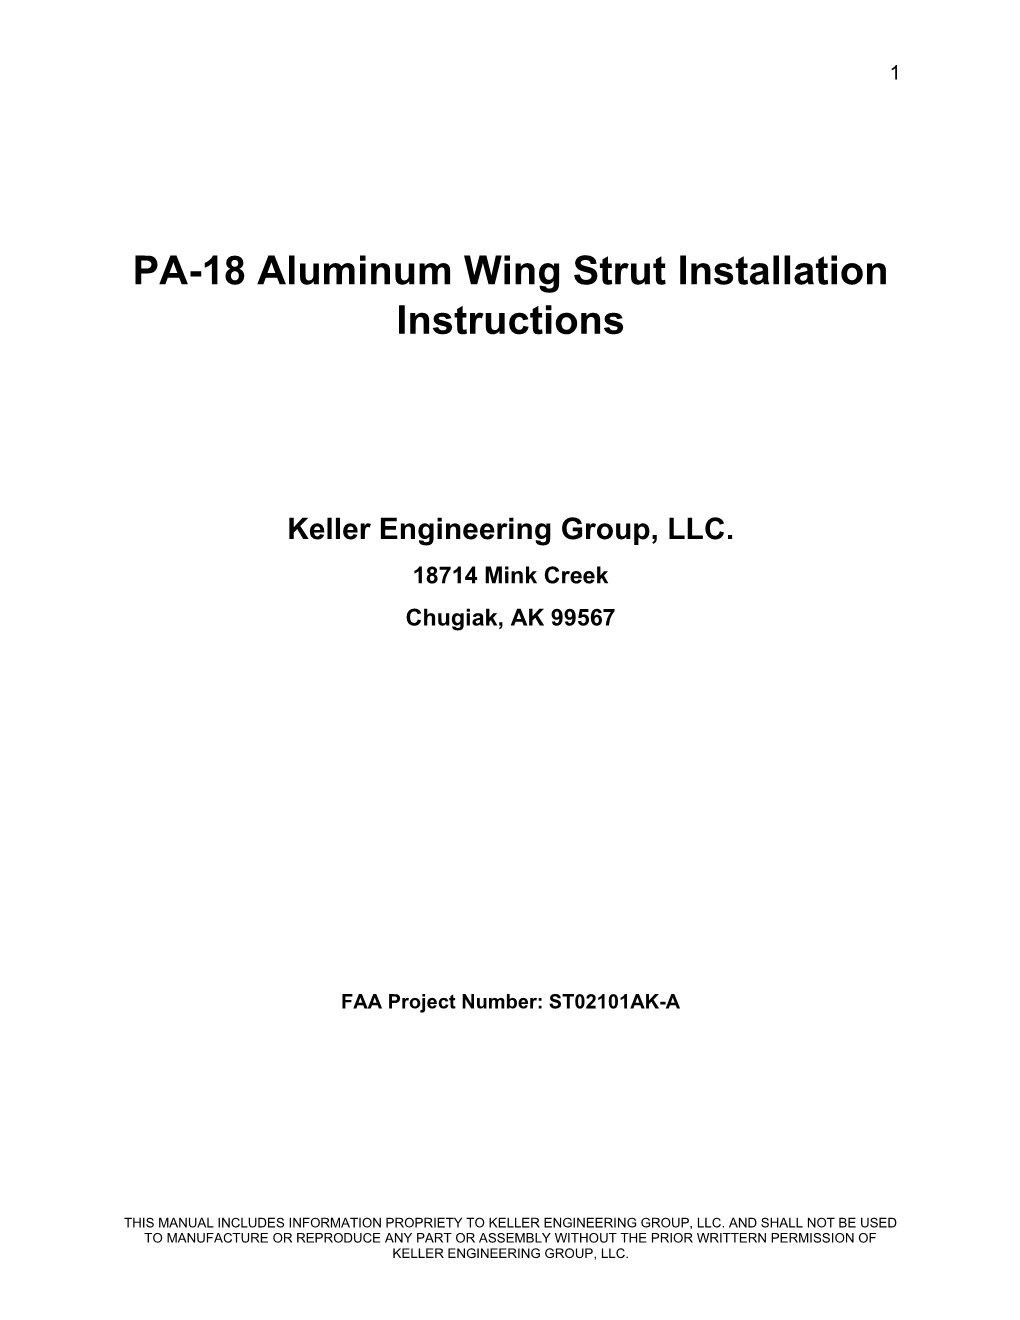 PA-18 Aluminum Wing Strut Installation Instructions